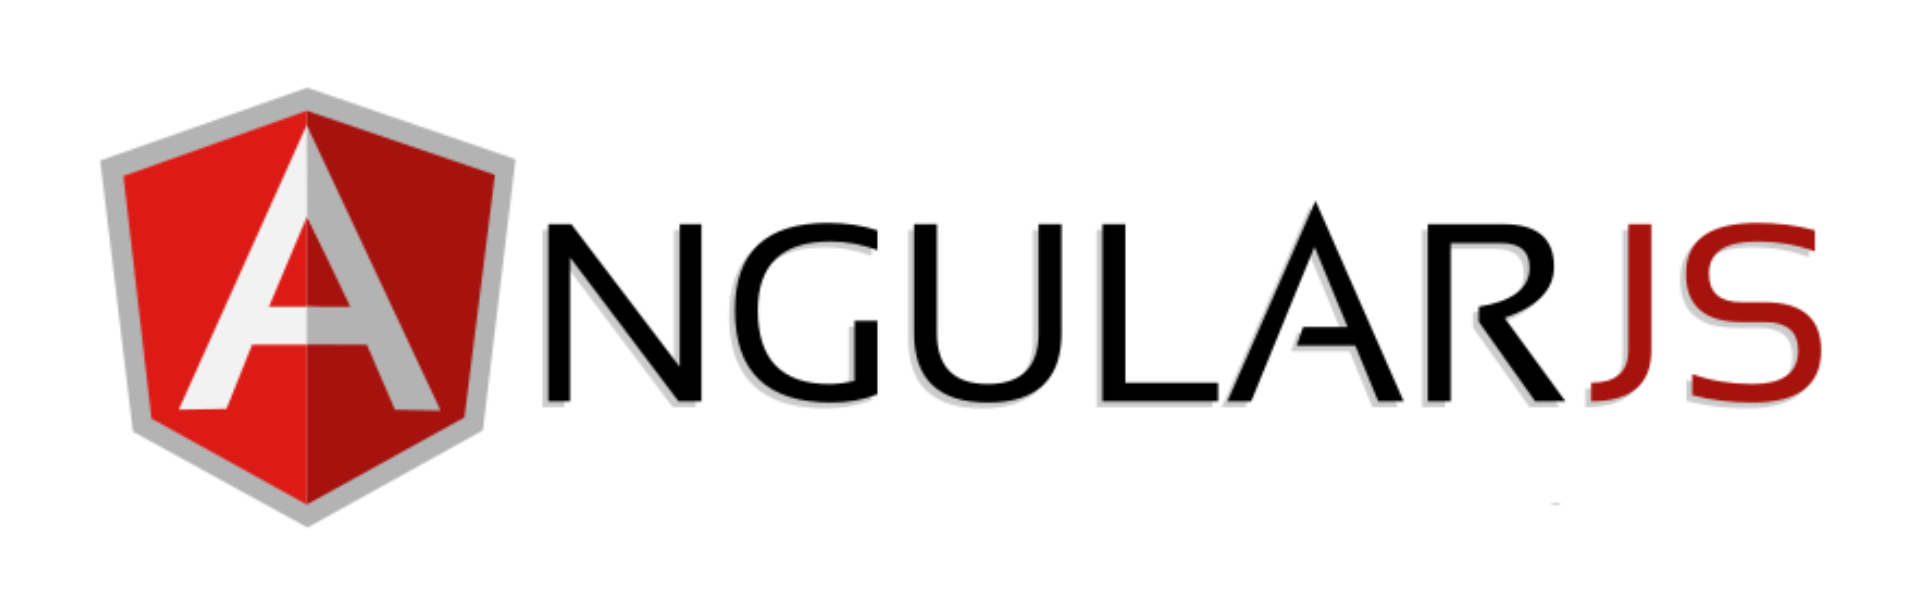 AngularJS_logo